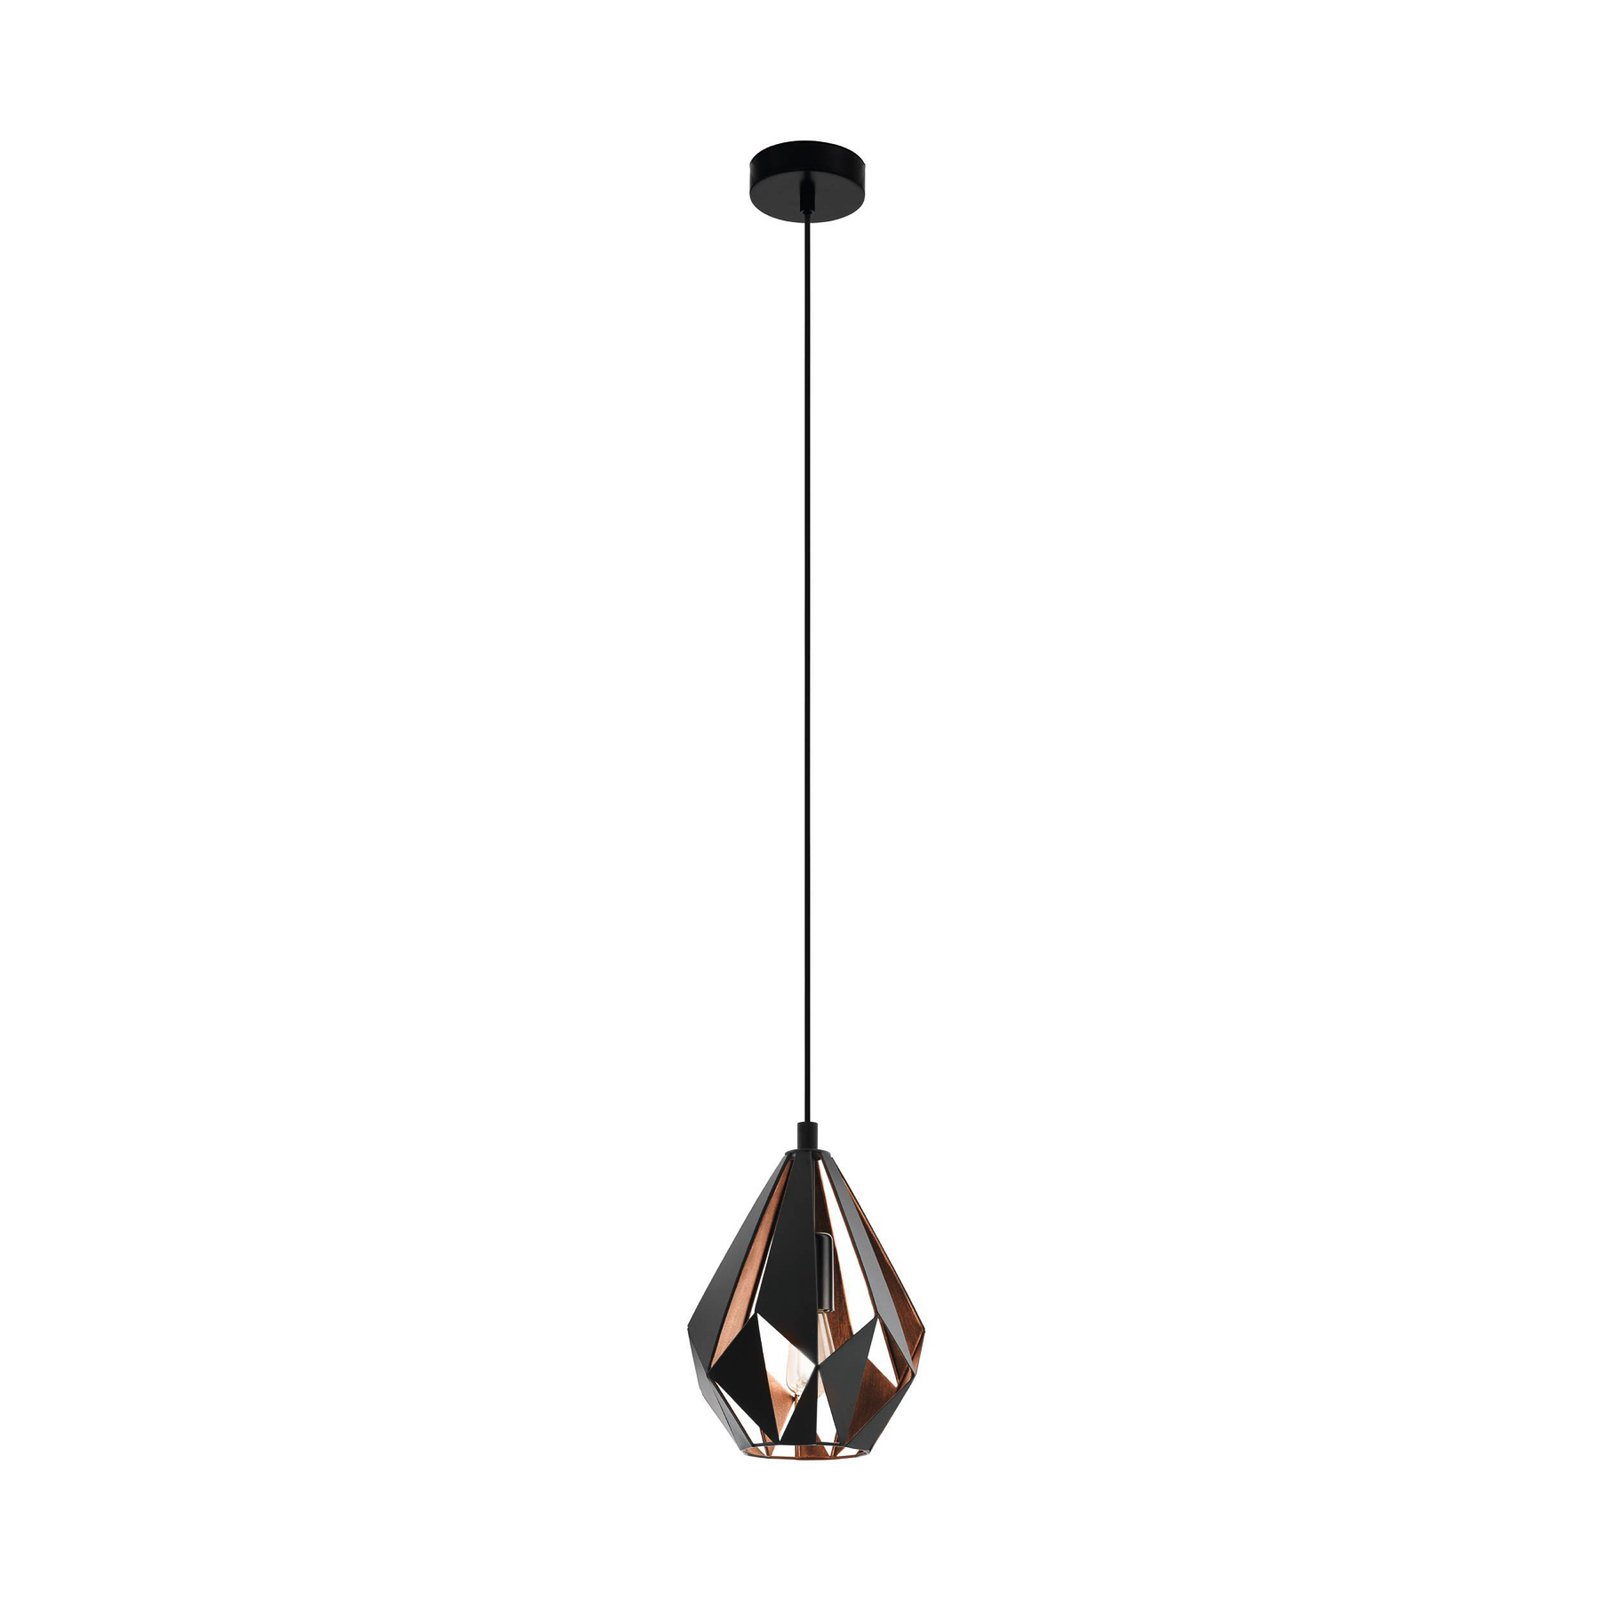 Carlton hanglamp, zwart/koper, Ø 20,5 cm